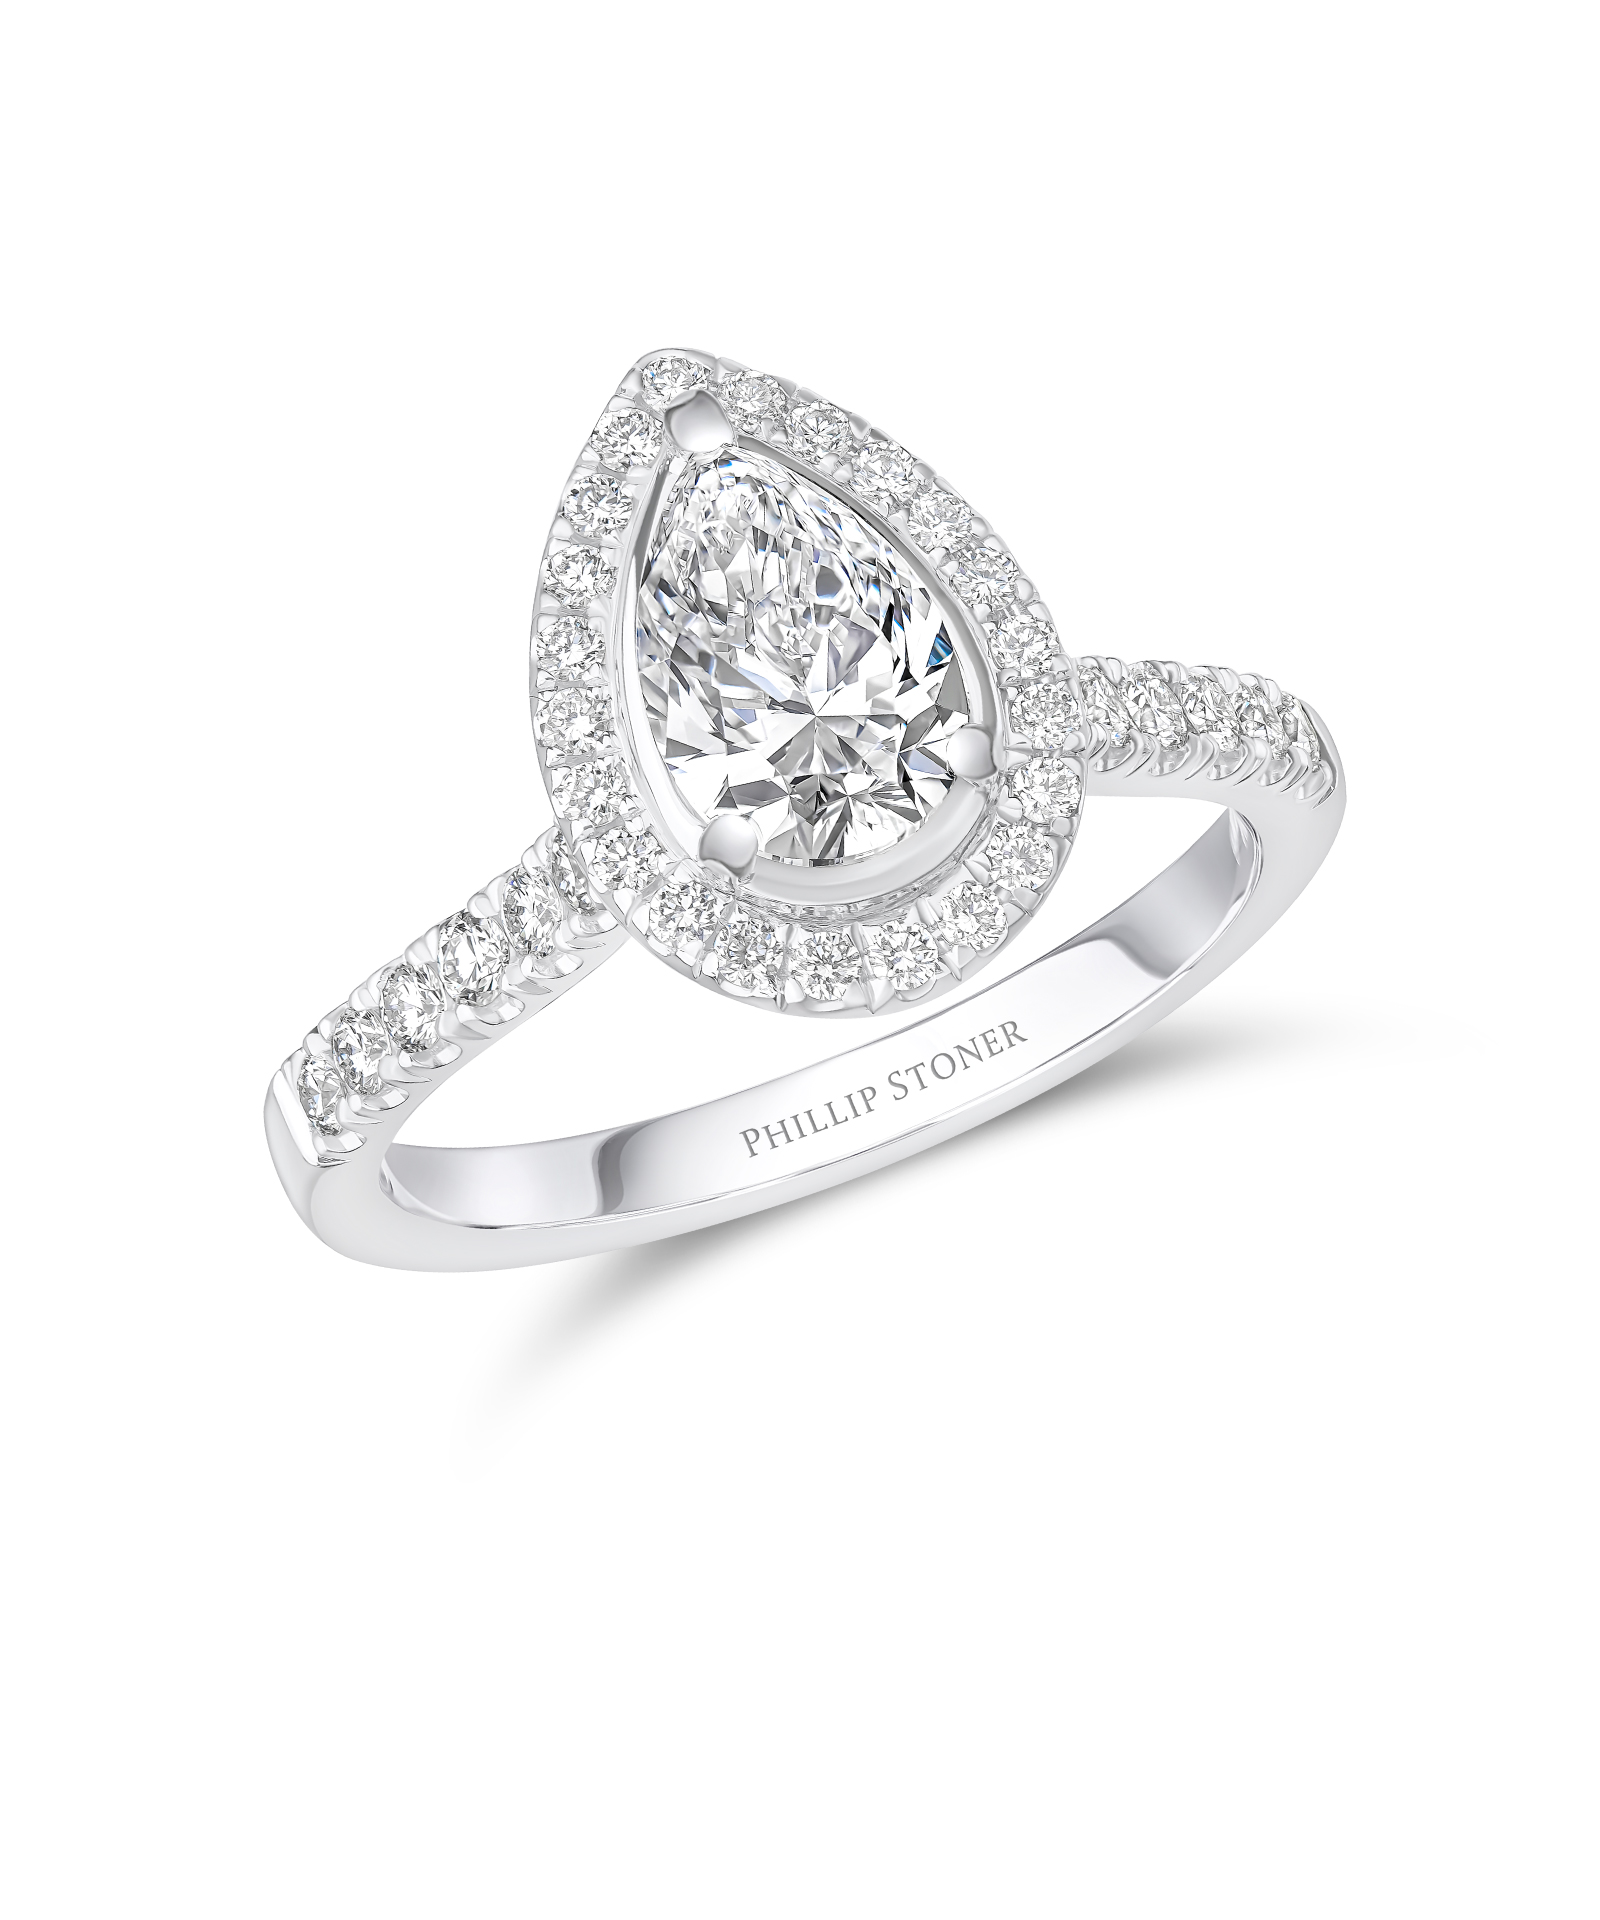 1ct Pear Cut Diamond Cluster Engagement Ring - Phillip Stoner The Jeweller